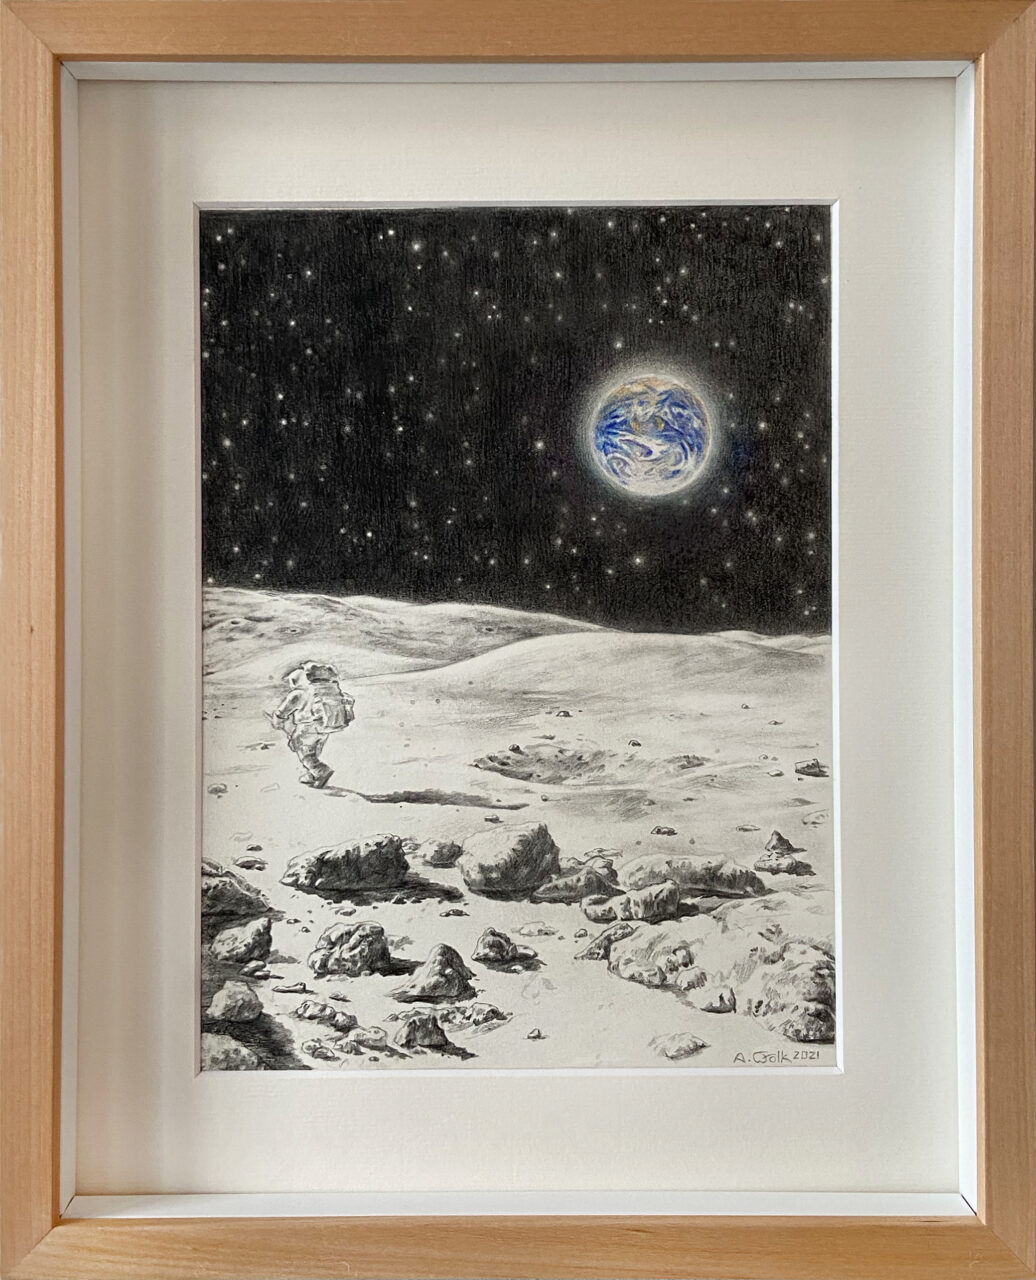 Le Voyage dans la Lune, 2021, 23 x 17 cm, Pencil and Crayon on paper,  sold by Dead Darlings Amsterdam - summer edition 2022